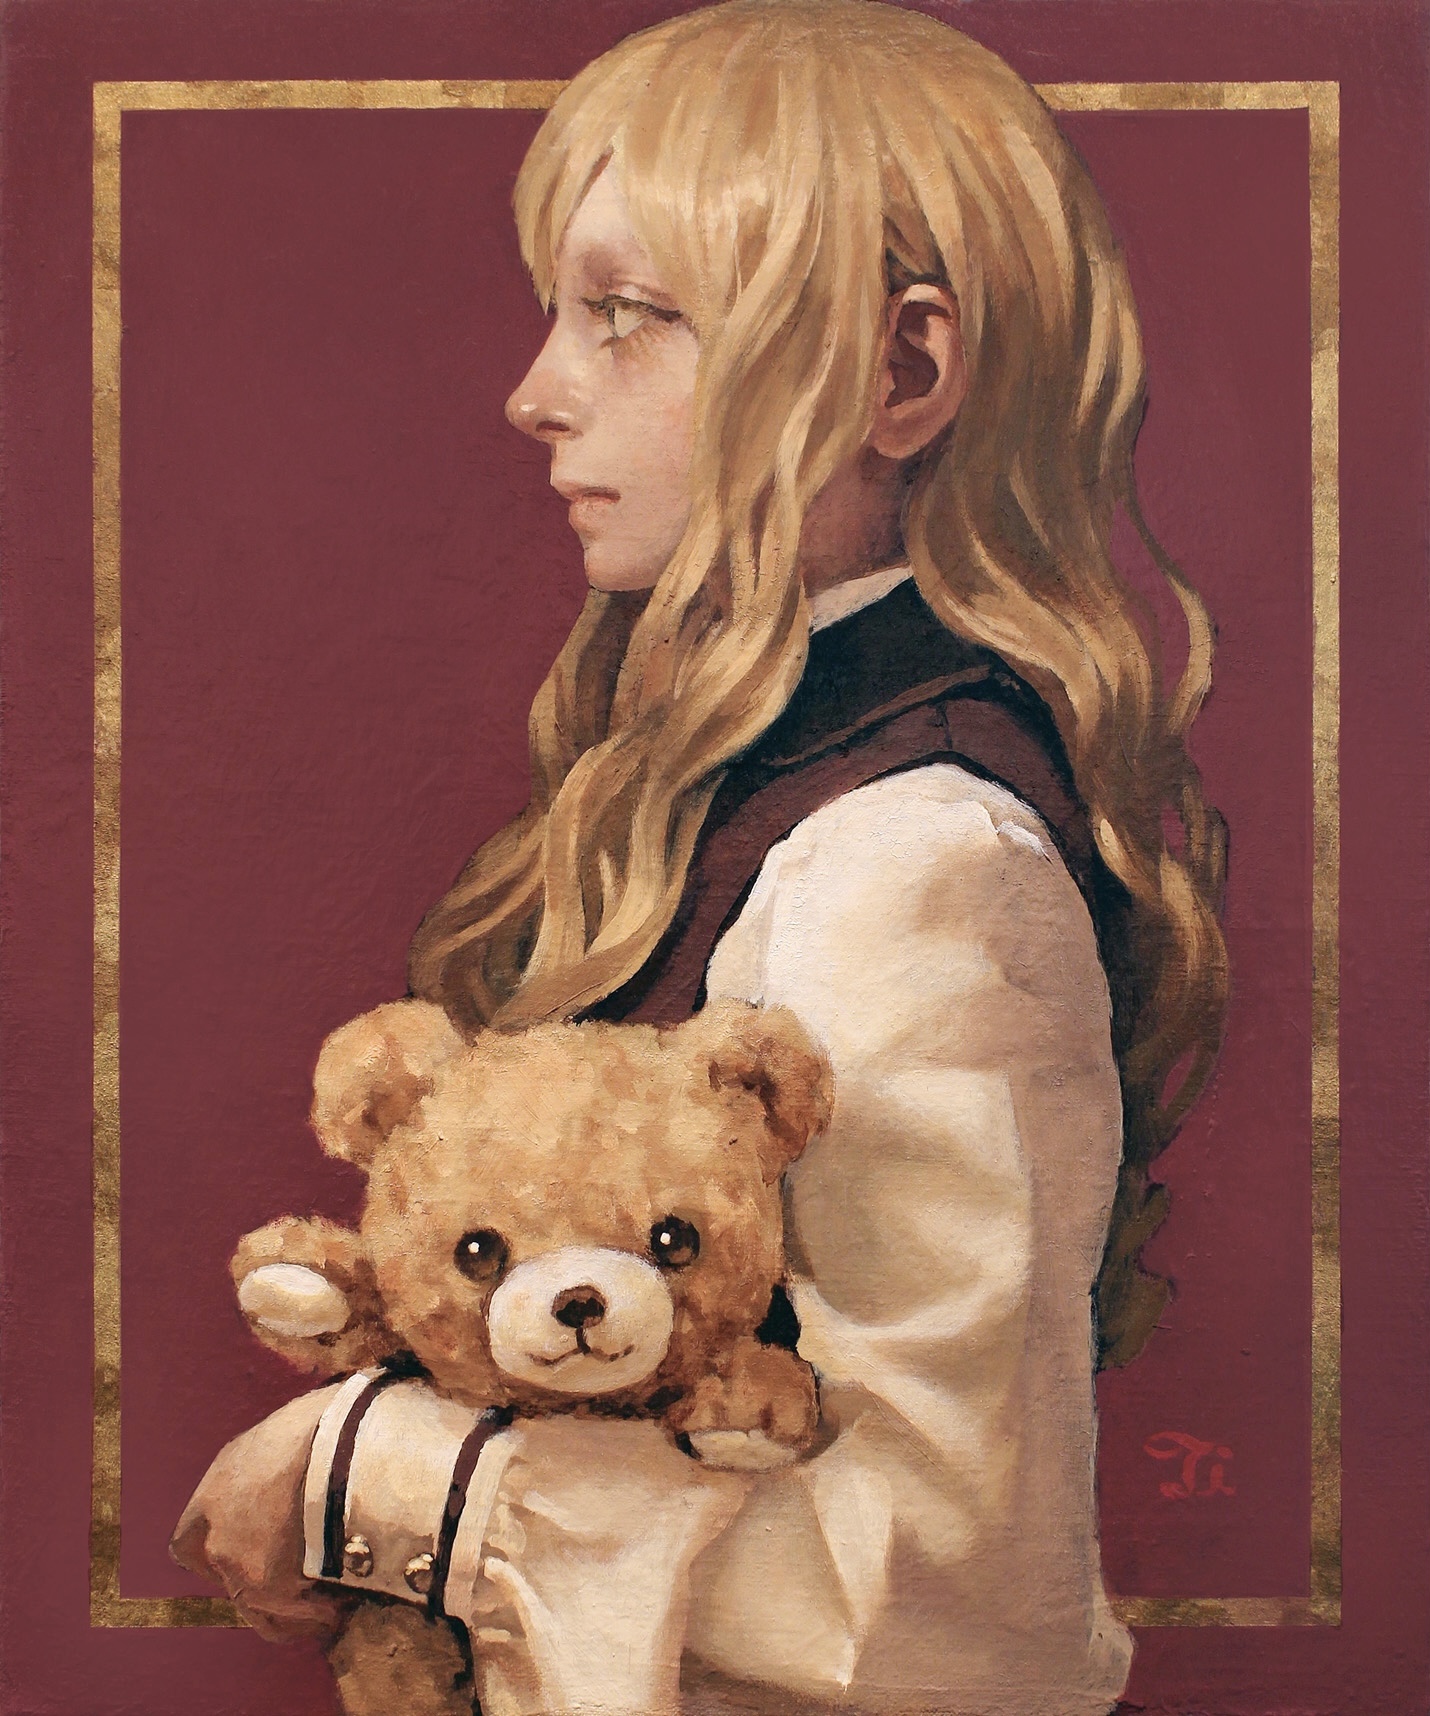 General 1430x1716 oil painting Pony(artist) women bears long hair blonde portrait display teddy bears